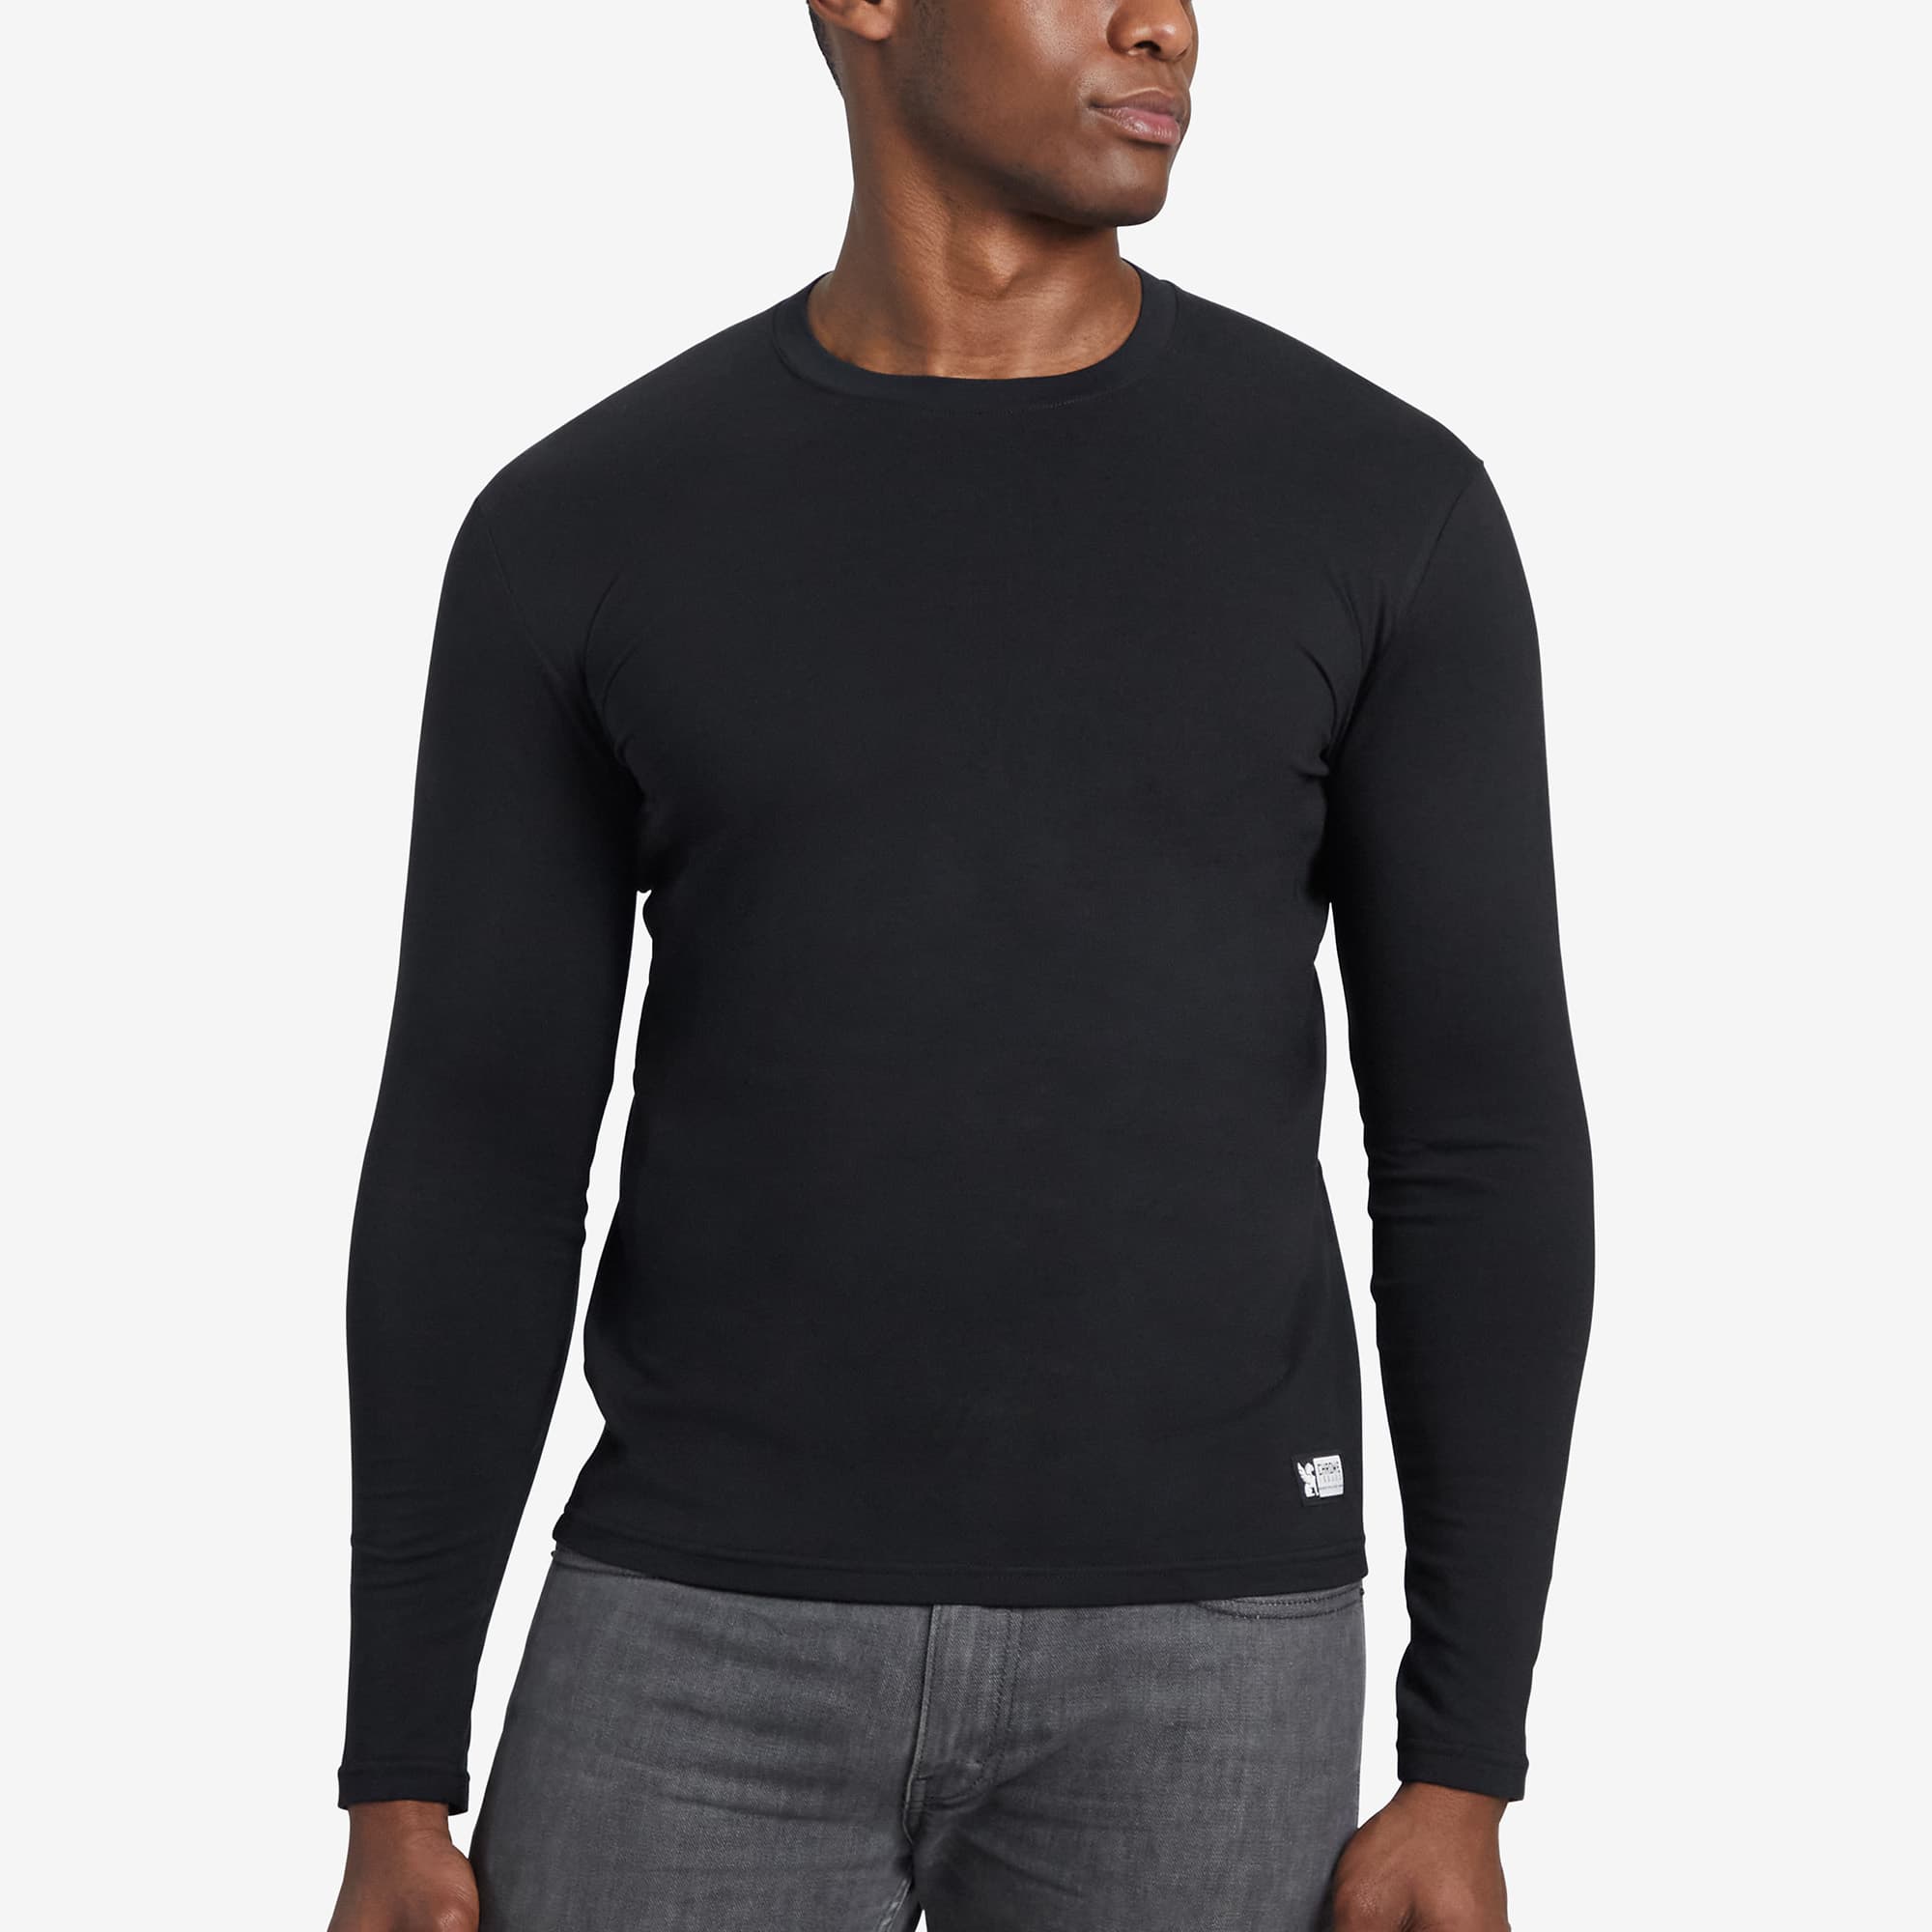 Men's Chrome basics long sleeve T-shirt in black worn by a man #color_black